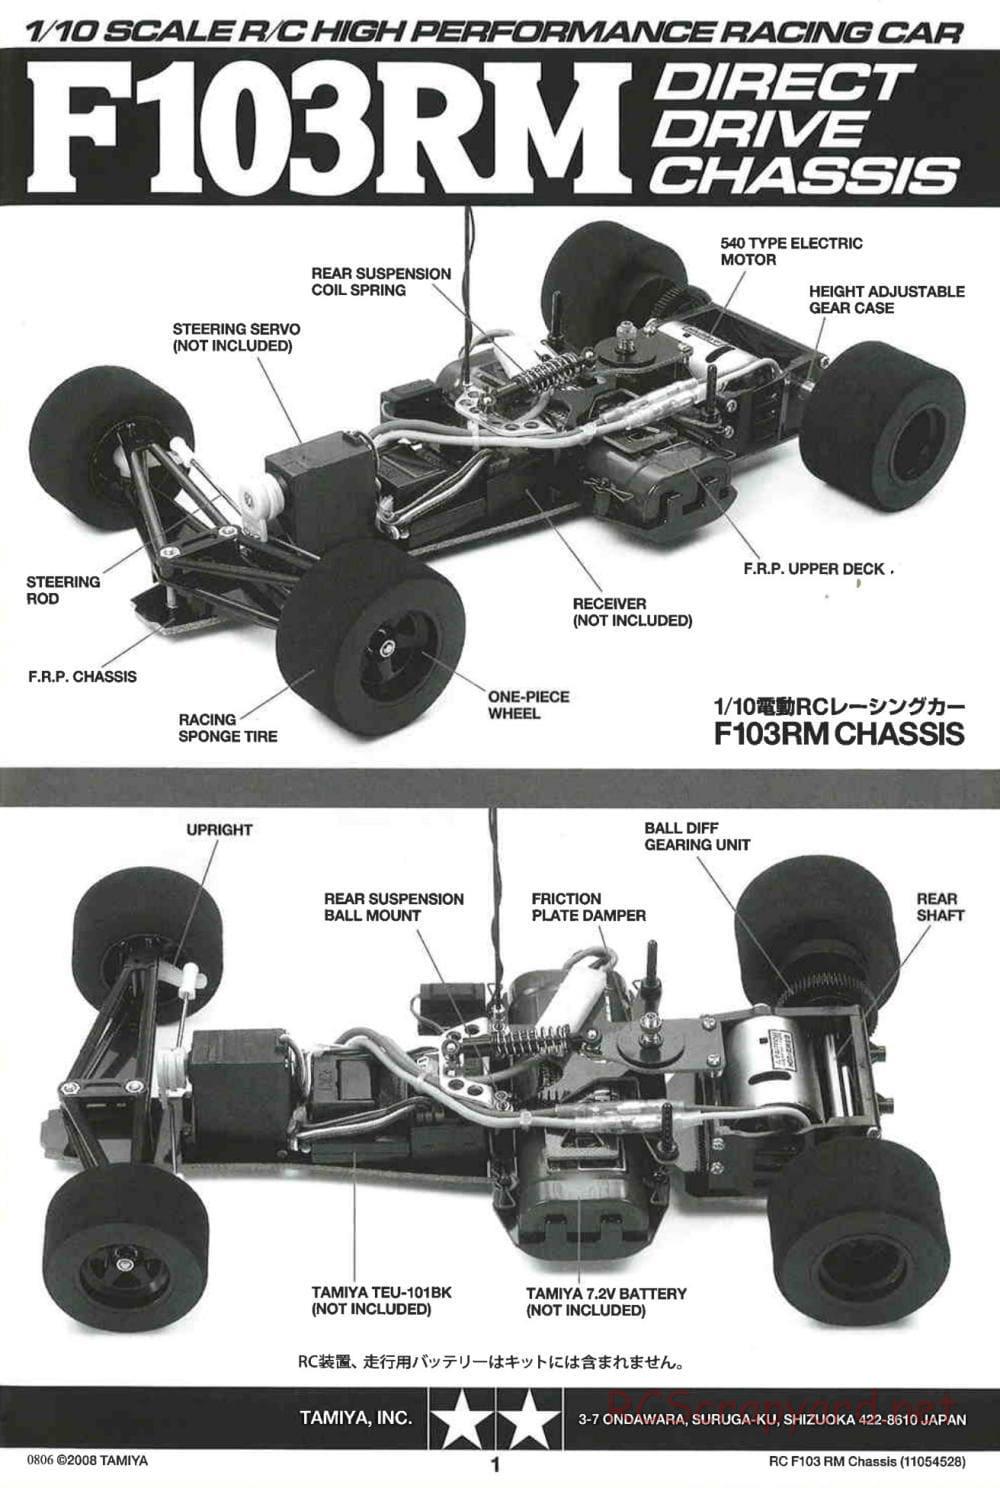 Tamiya - F103RM Chassis - Manual - Page 1